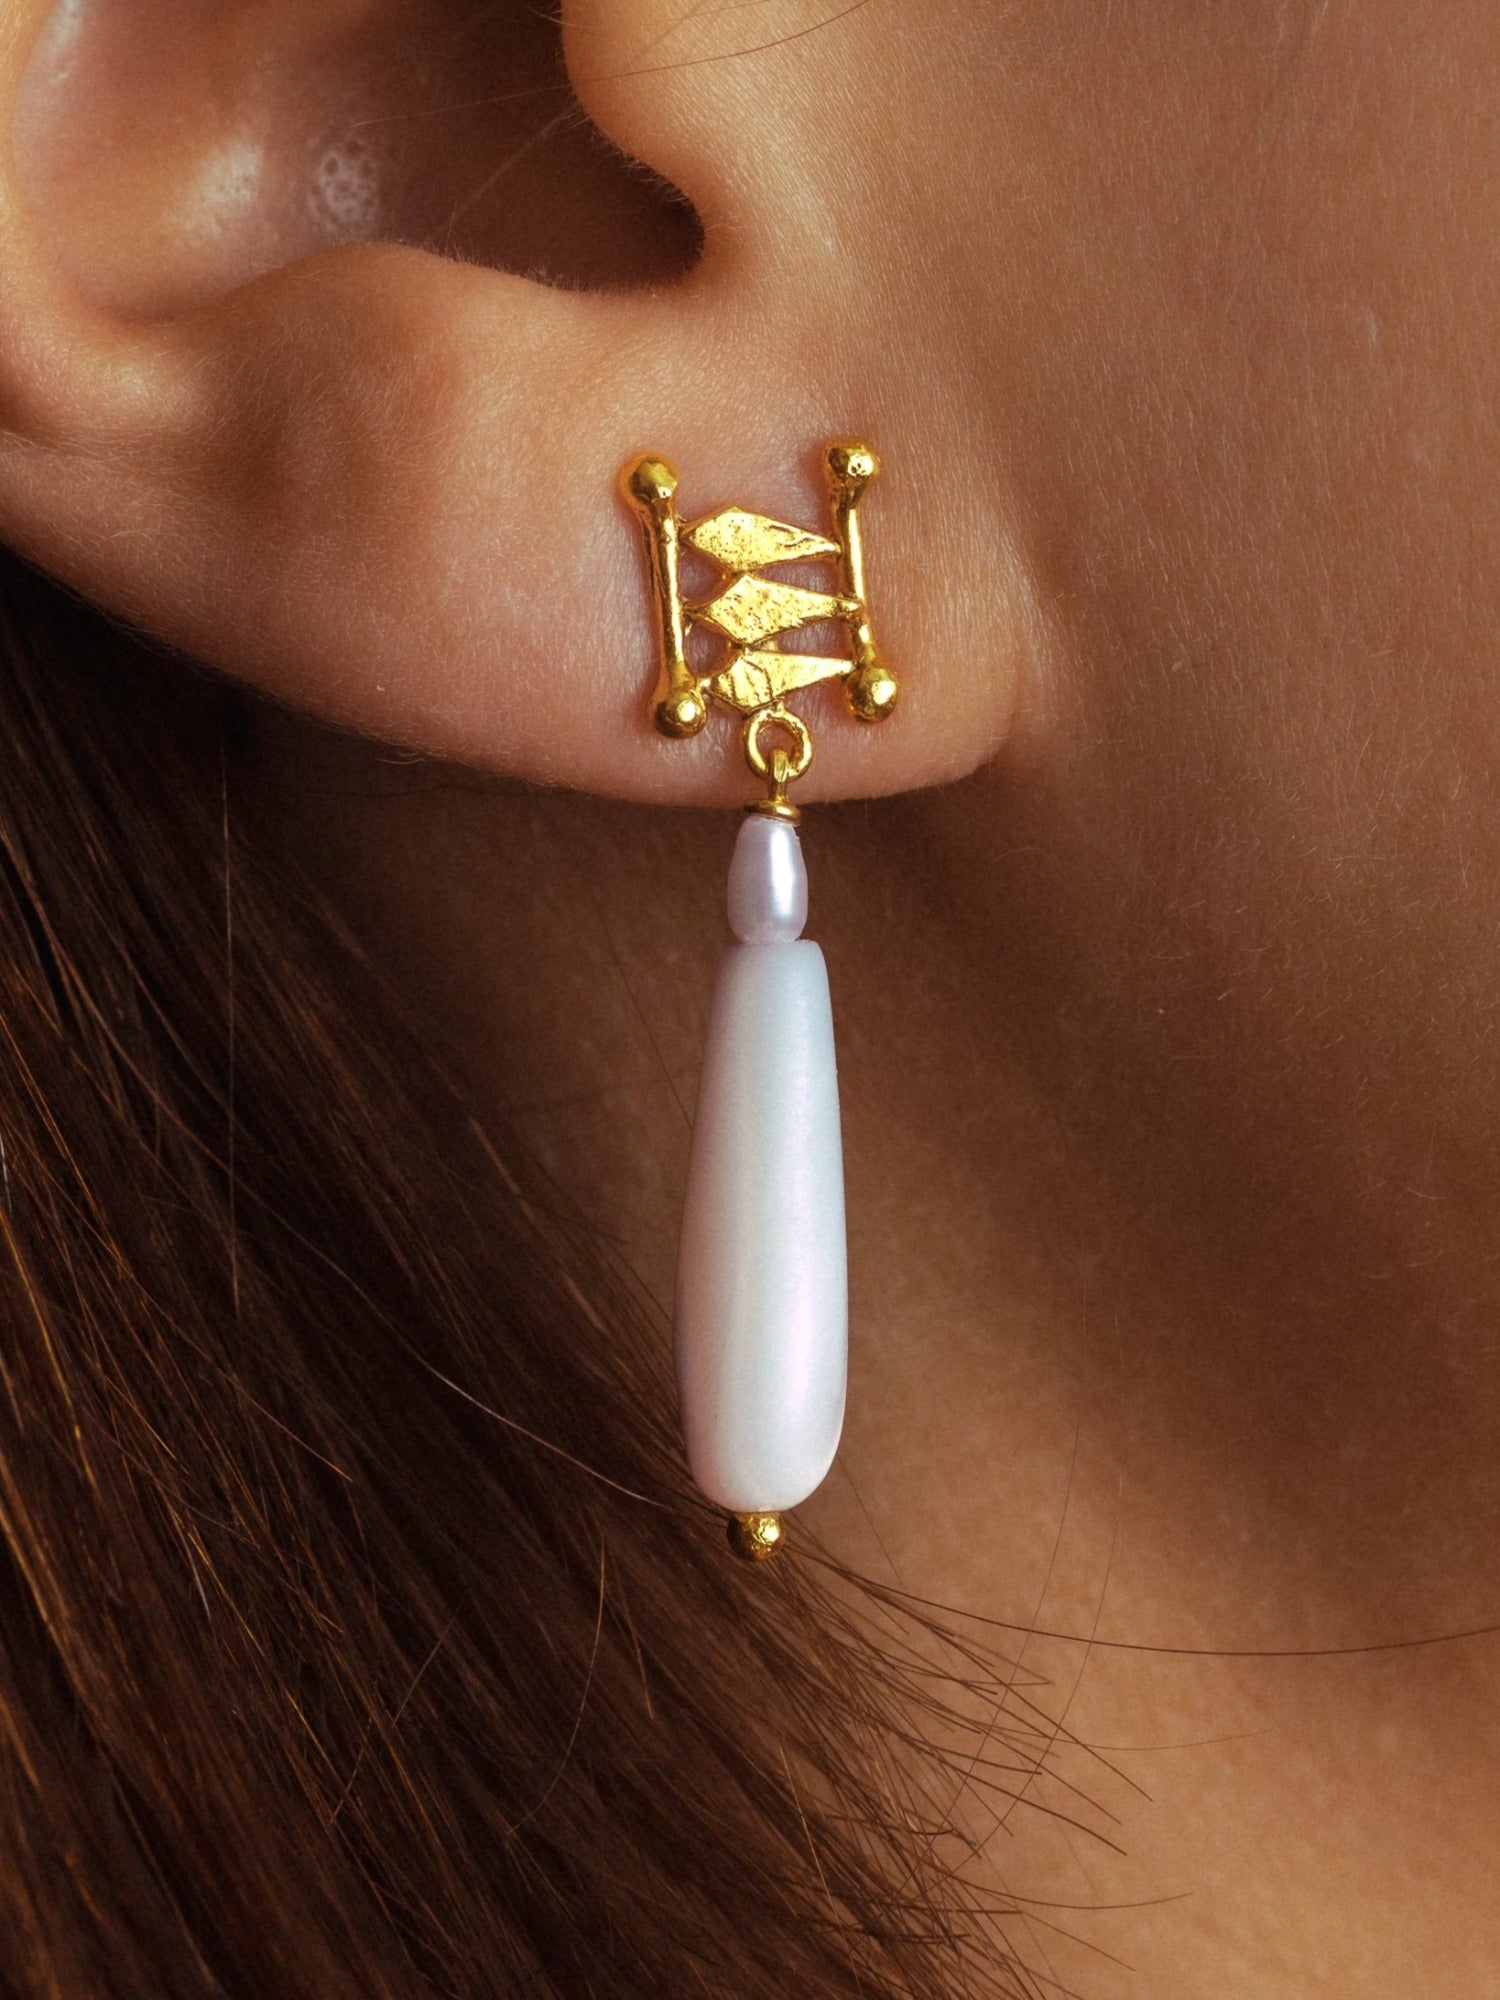 The Taeuber-Arp Earrings (pair)